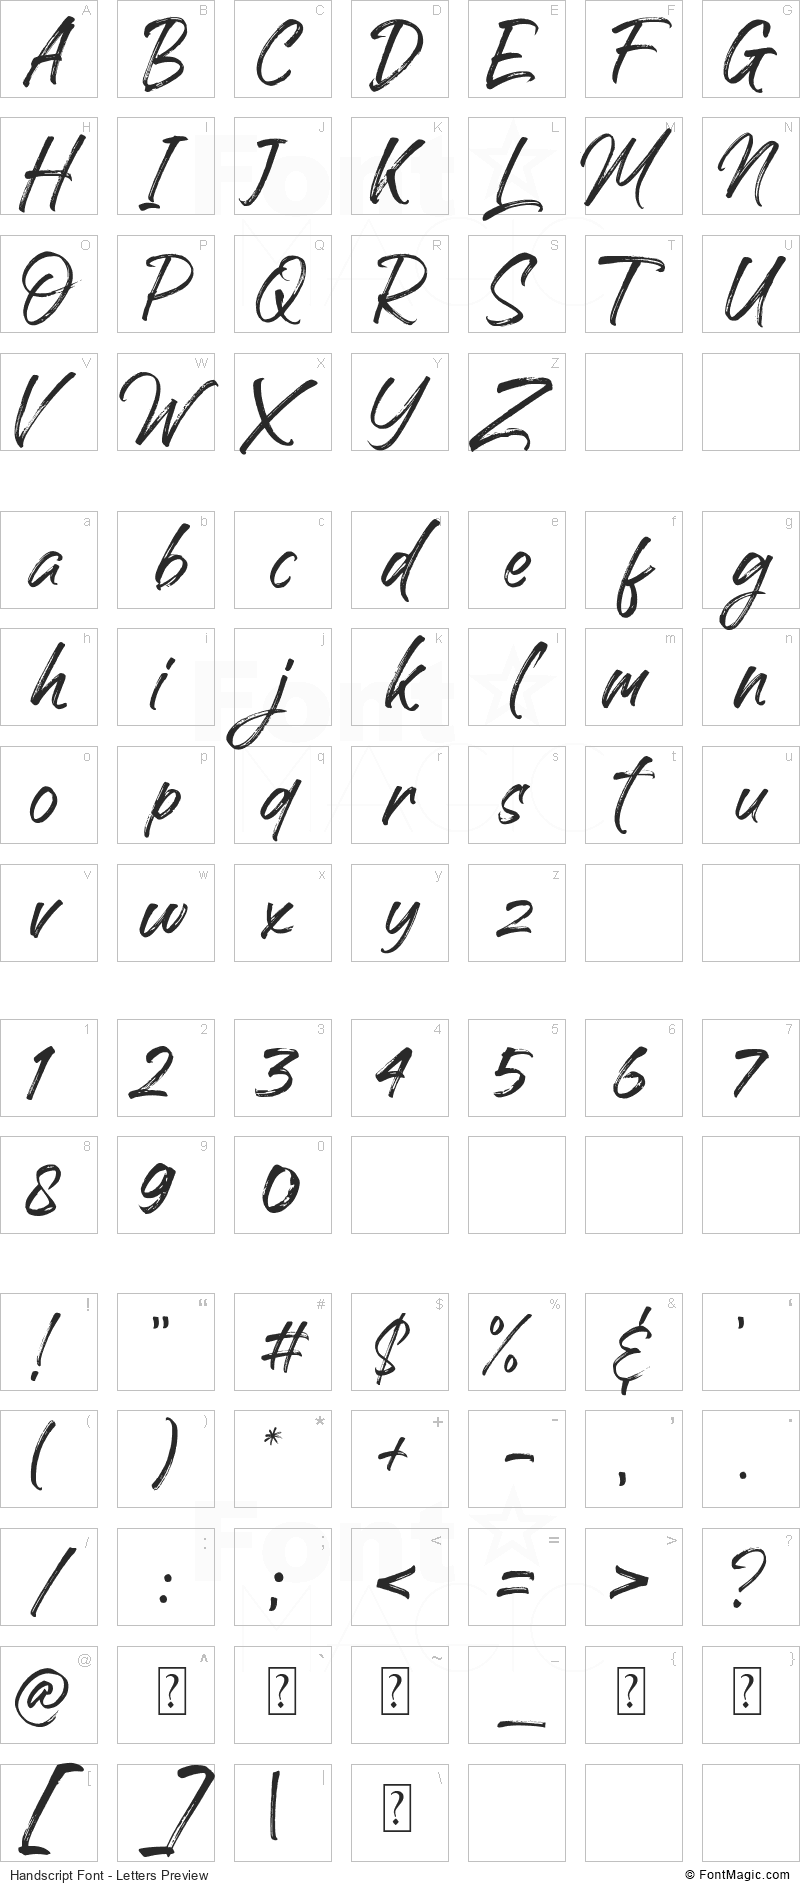 Handscript Font - All Latters Preview Chart